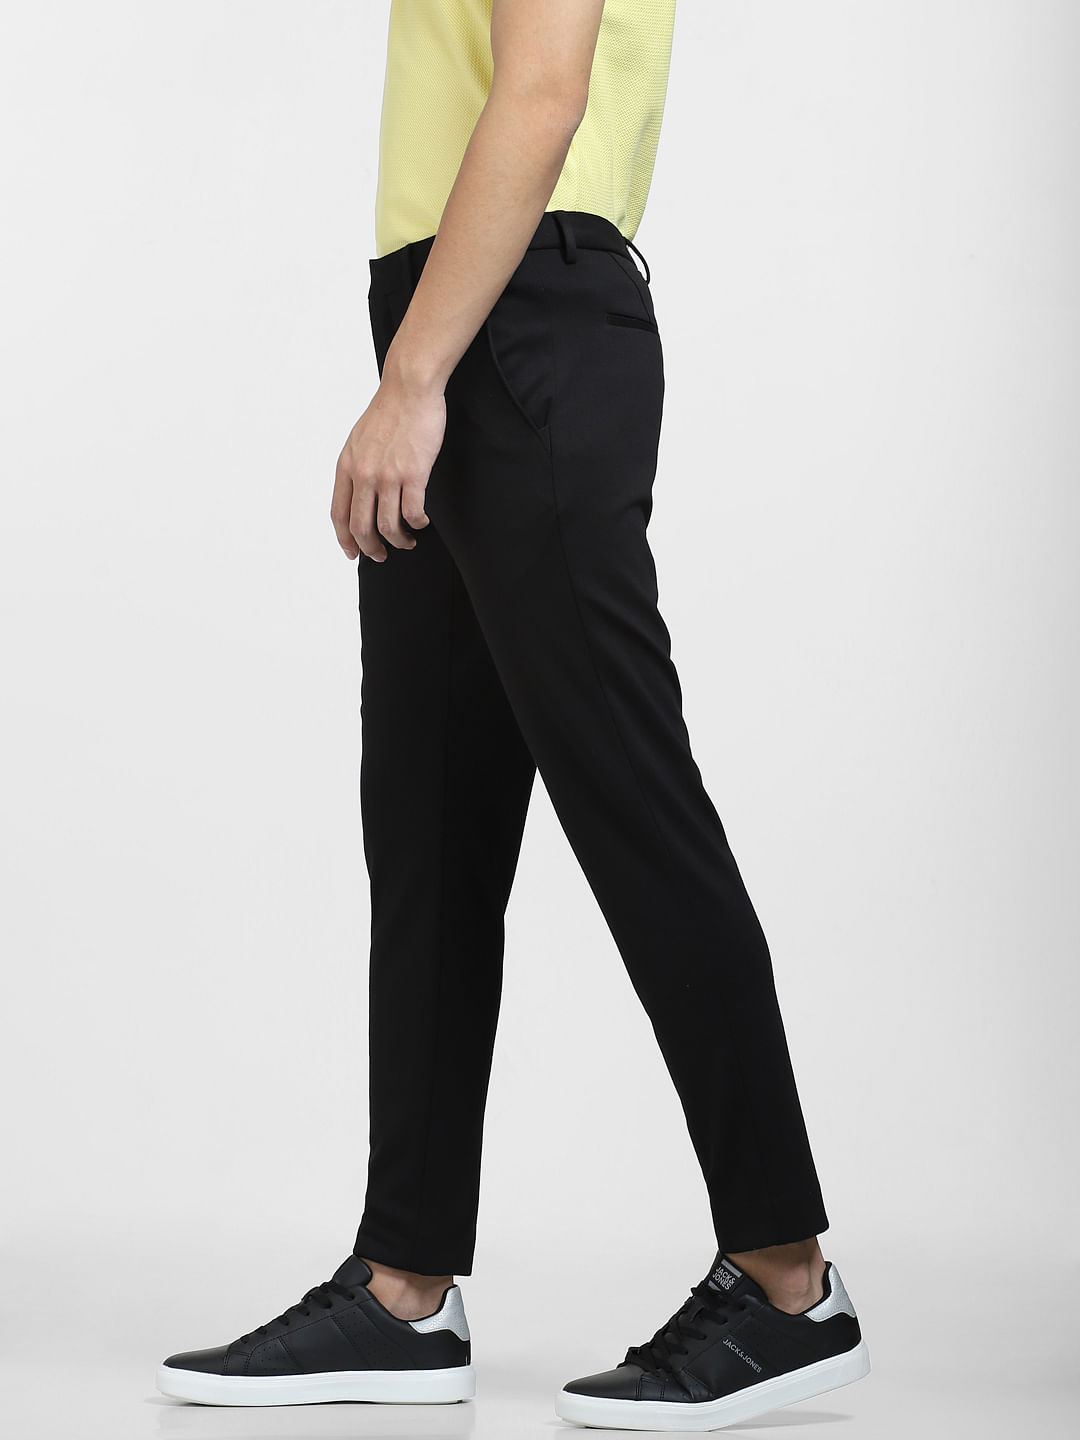 Buy PROLIFE Men's Slim FIT Classic Formal Trousers Pants (28, Black) at  Amazon.in